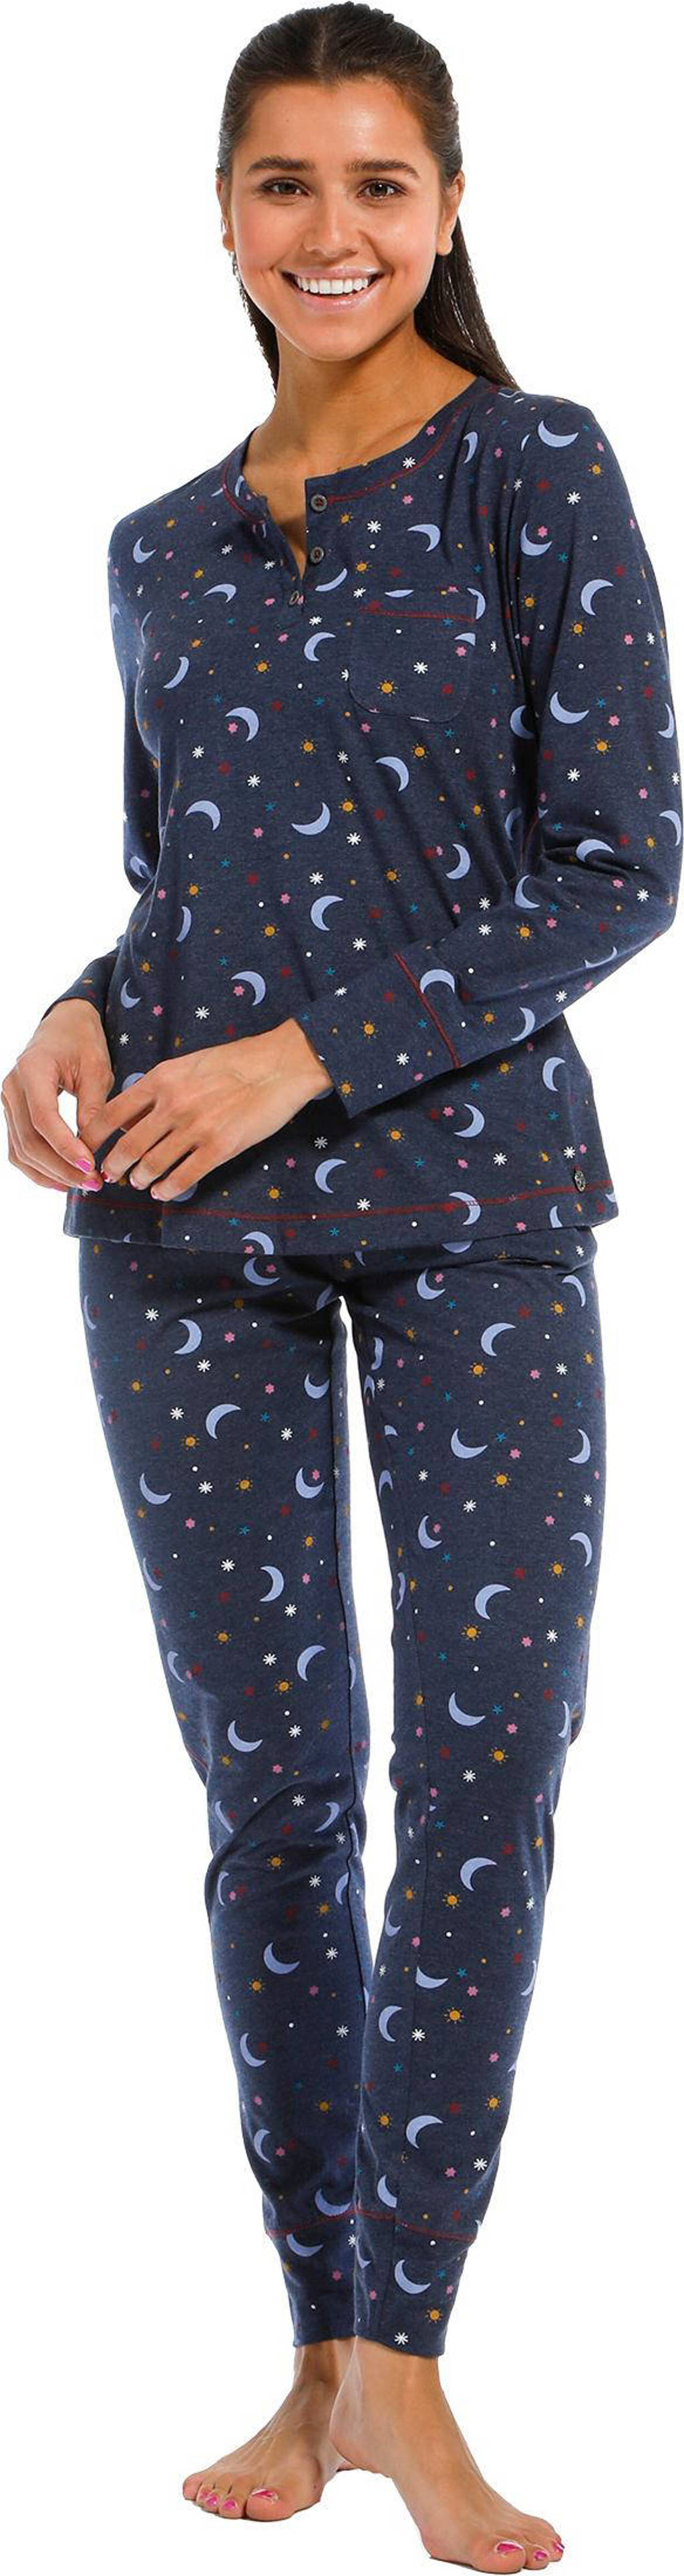 Rebelle pyjama met all over print donkerblauw, Donkerblauw